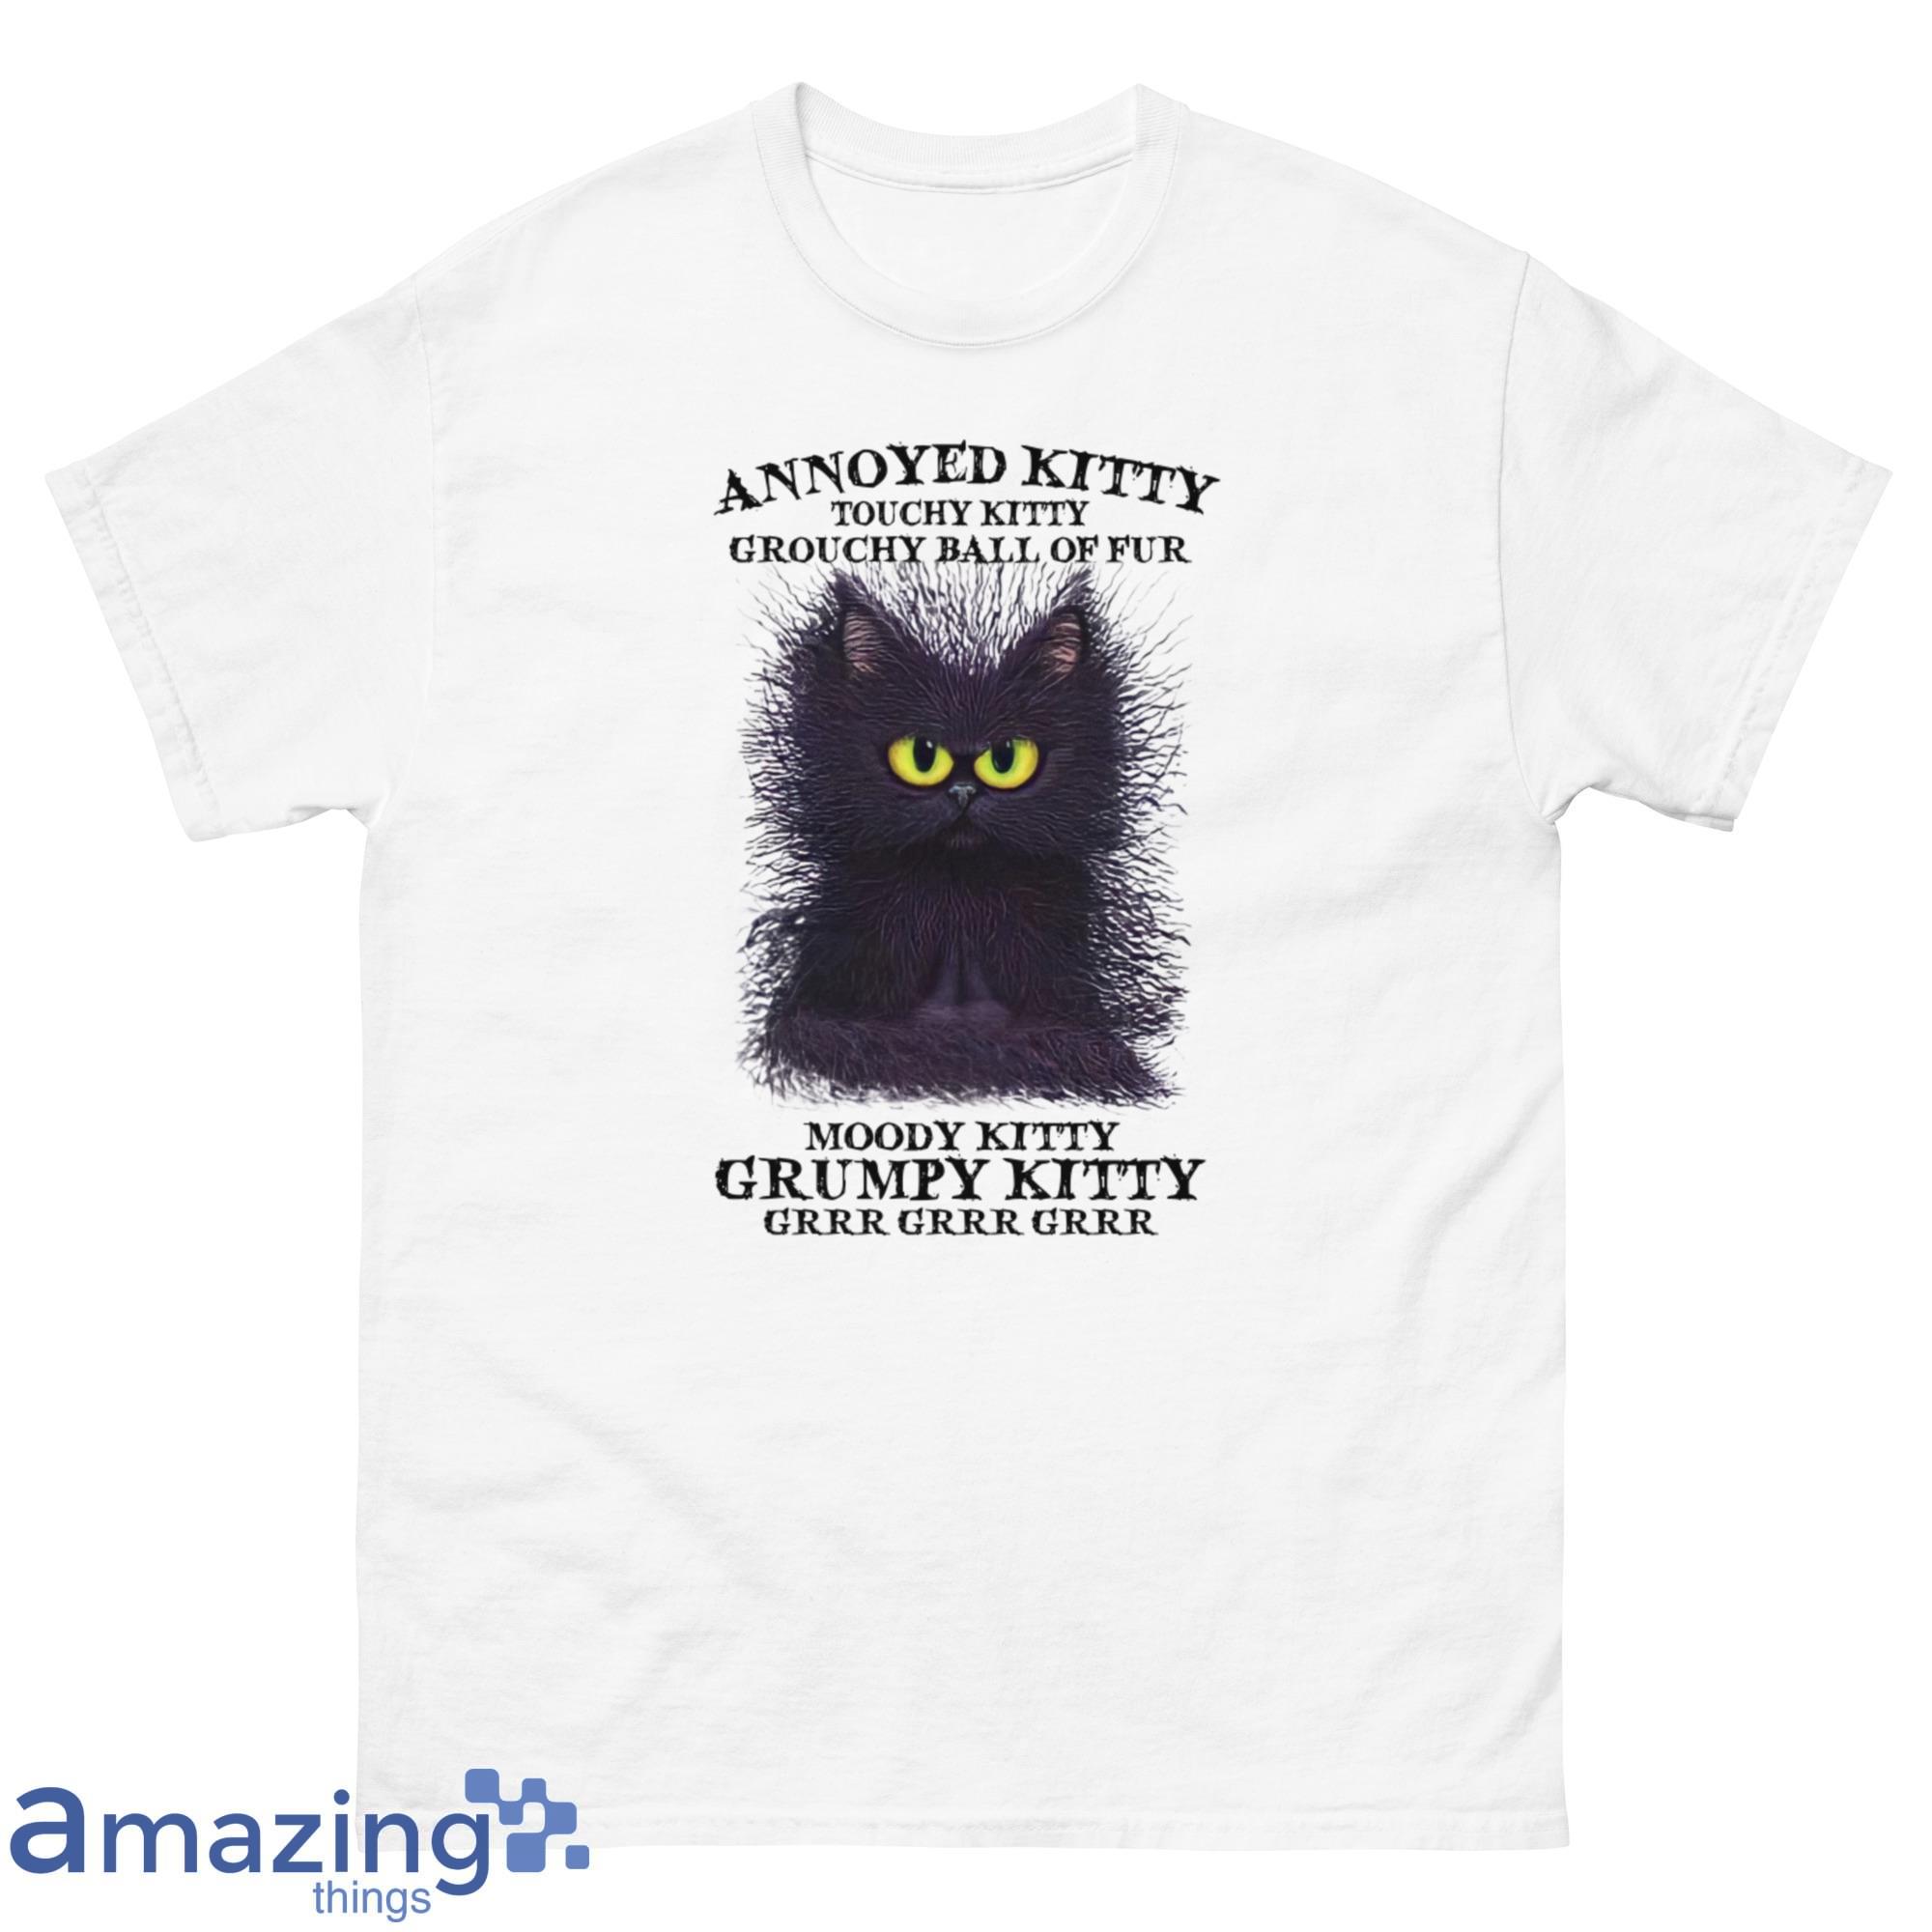 Annoyed Kitty Touhy Kitty Grouchy Ball Of Fur, Moody Kitty Grumpy Kitty Shirt - G500 Men’s Classic T-Shirt-1